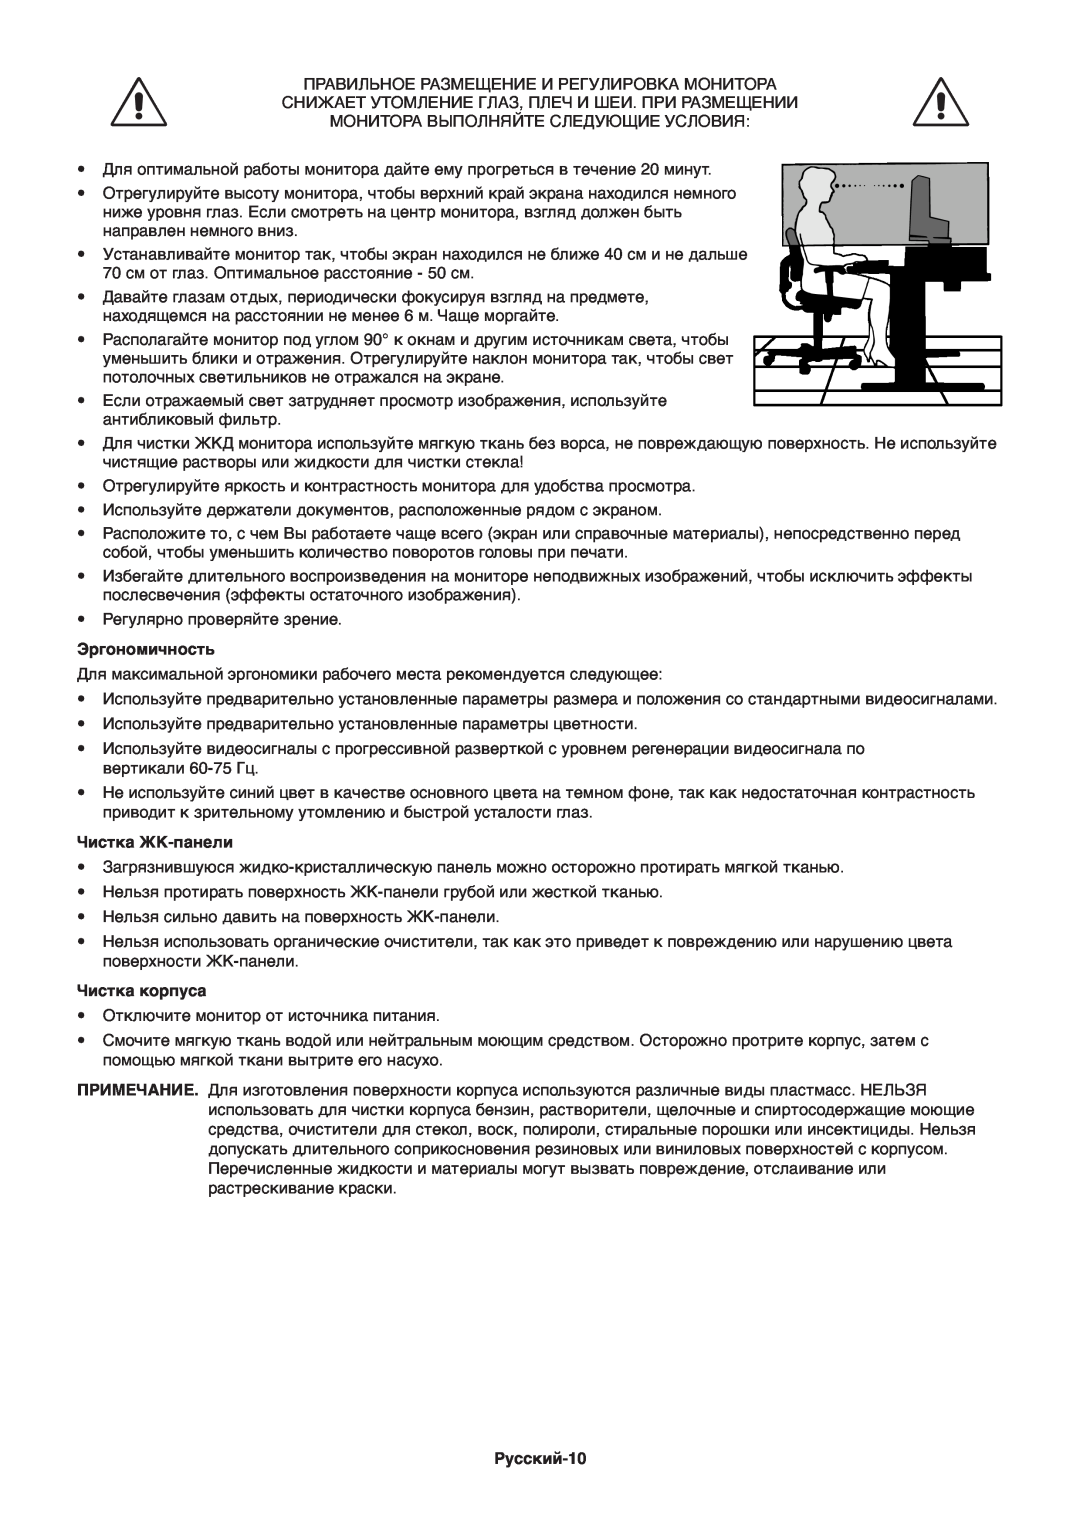 NEC ACCUSYNC LCD93V, ACCUSYNC LCD73V manual Эргономичность, Чистка ЖК-панели, Чистка корпуса, Русский-10 